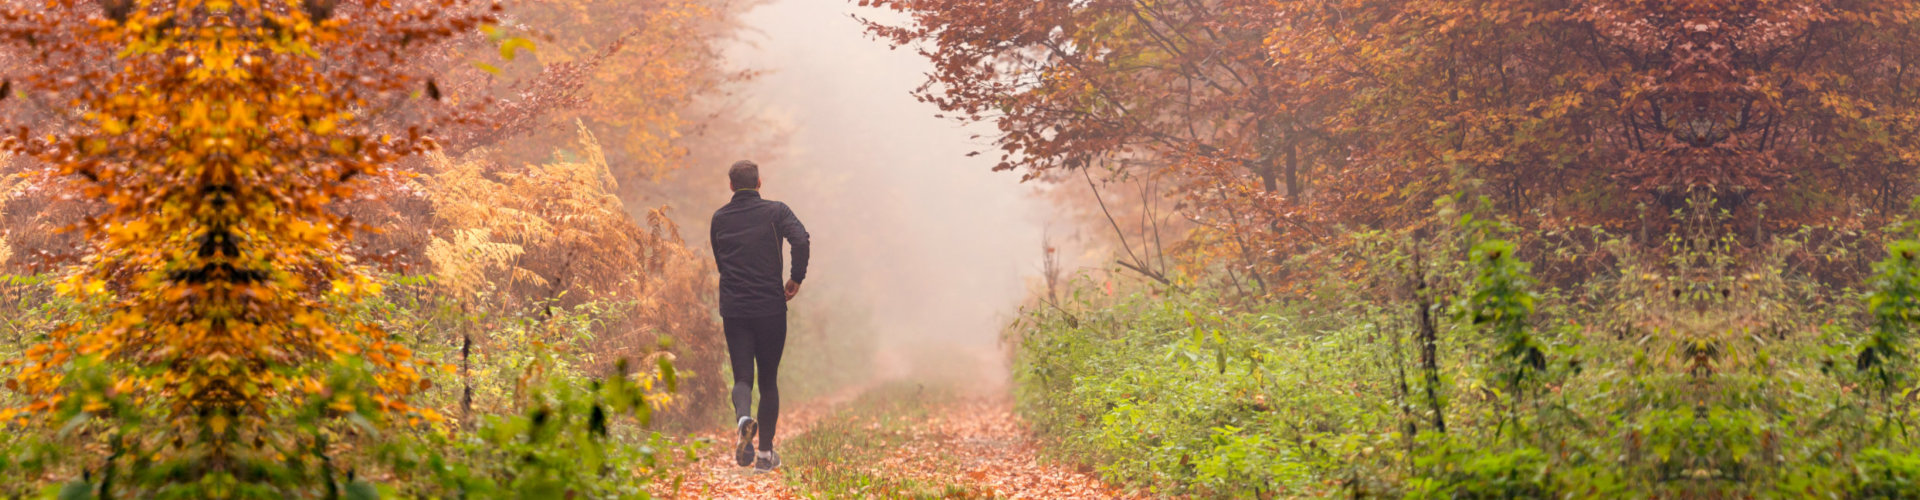 Running in foggy autumn forest